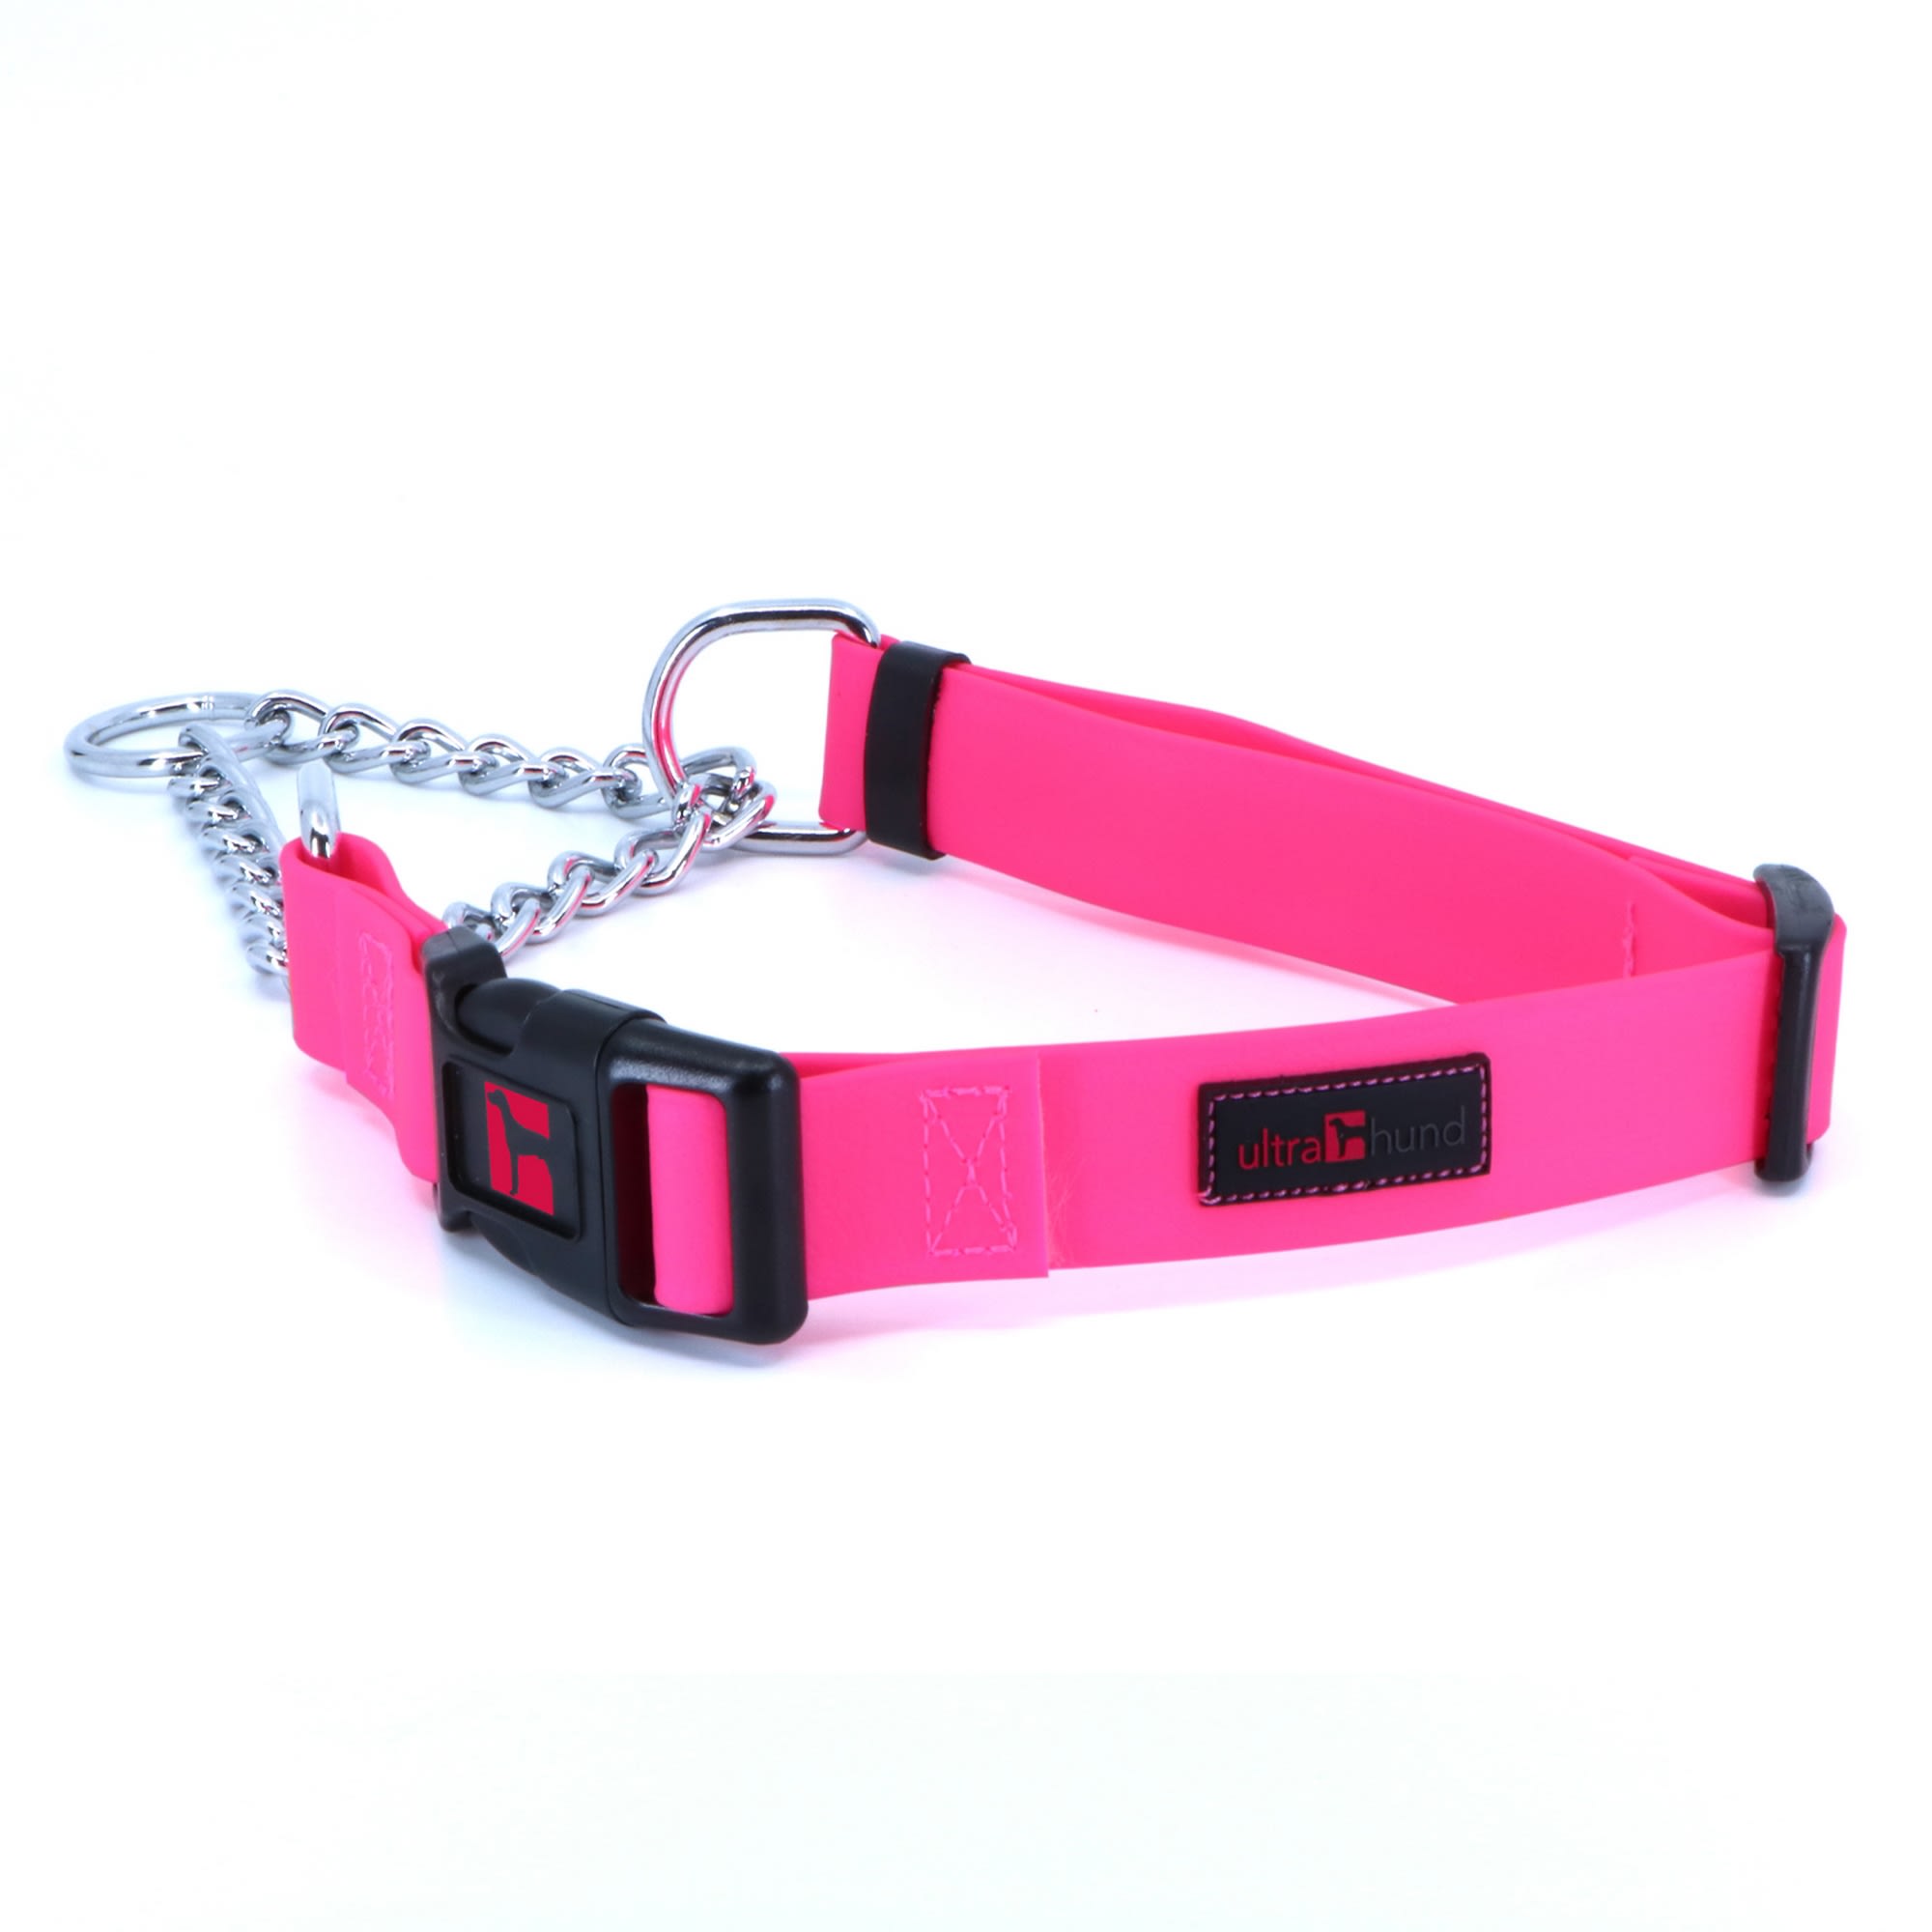 pink seahawks dog collar